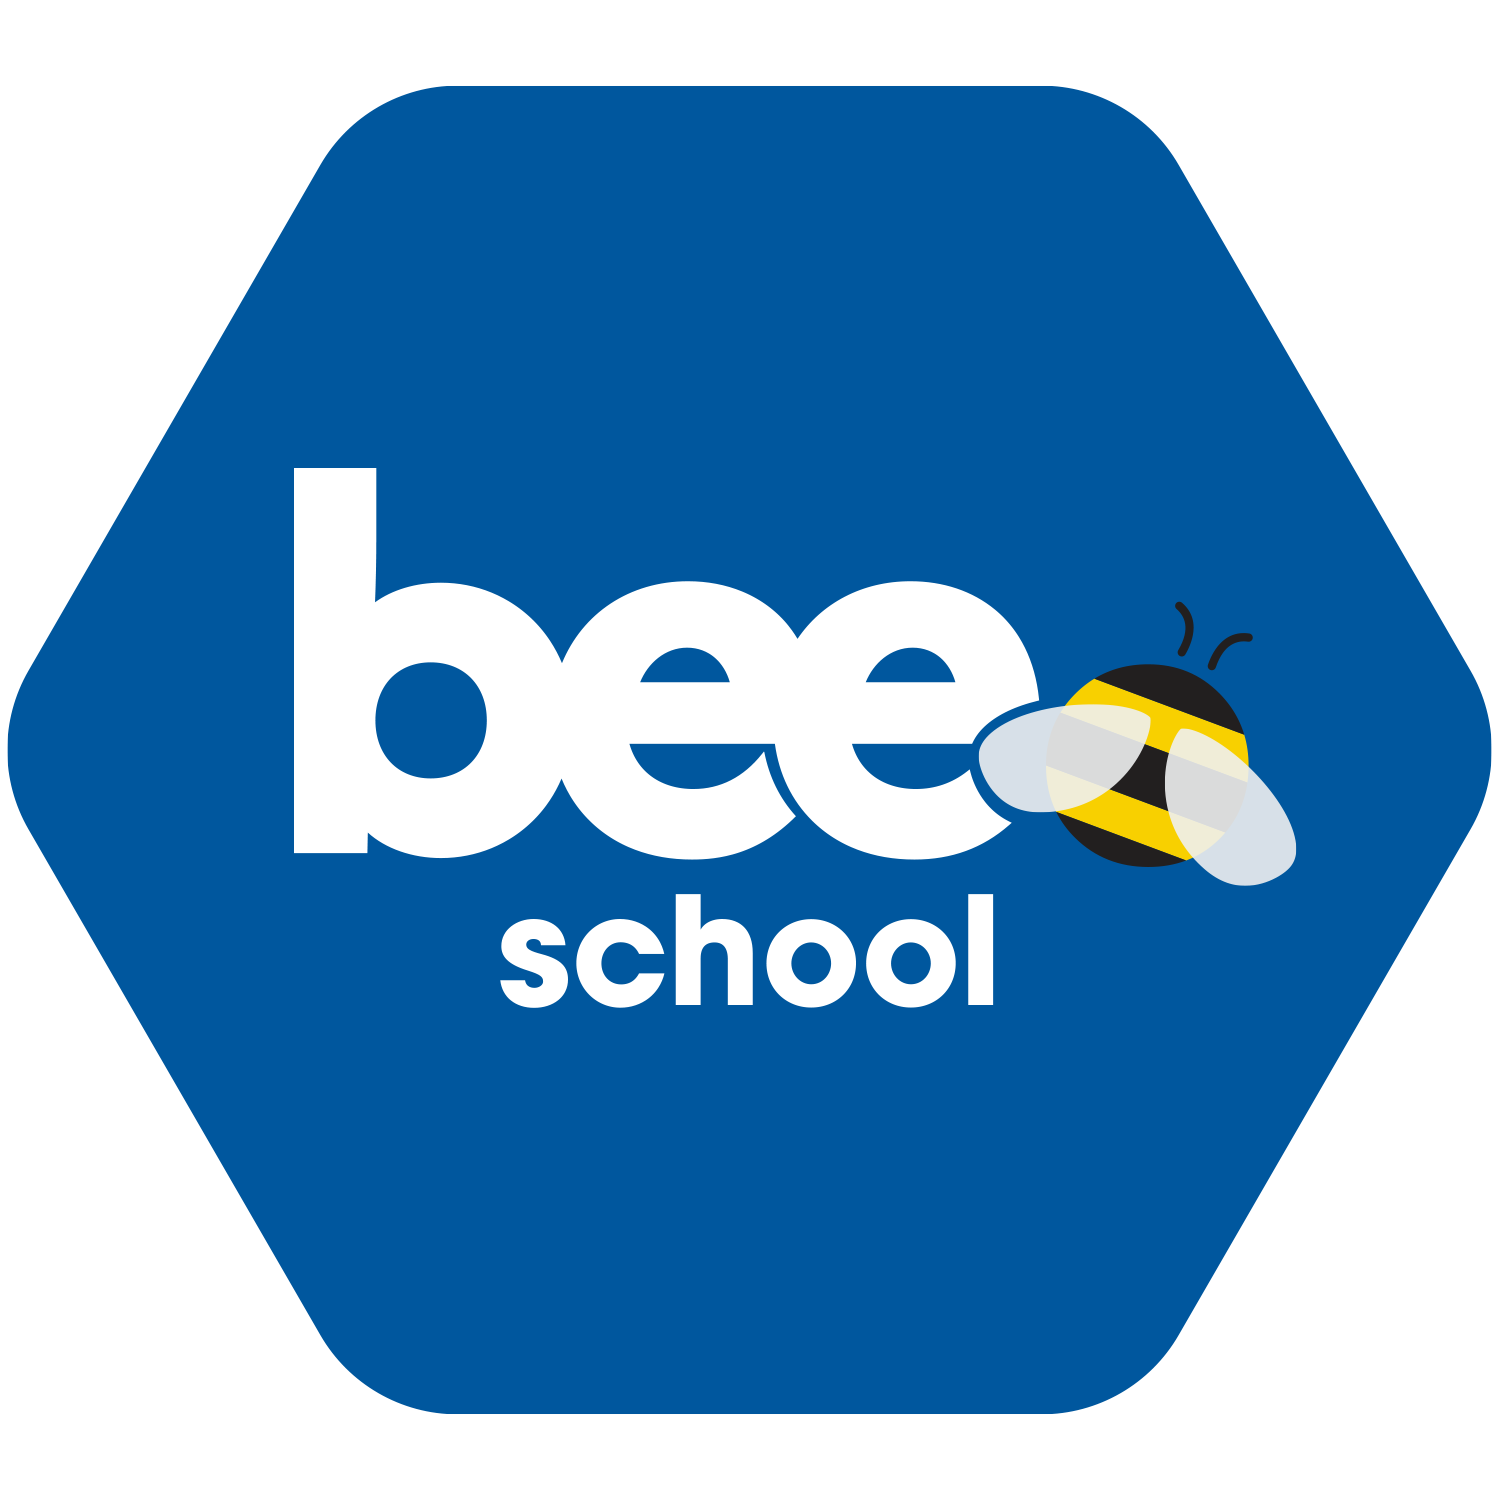 Scripps National Spelling Bee school level logo